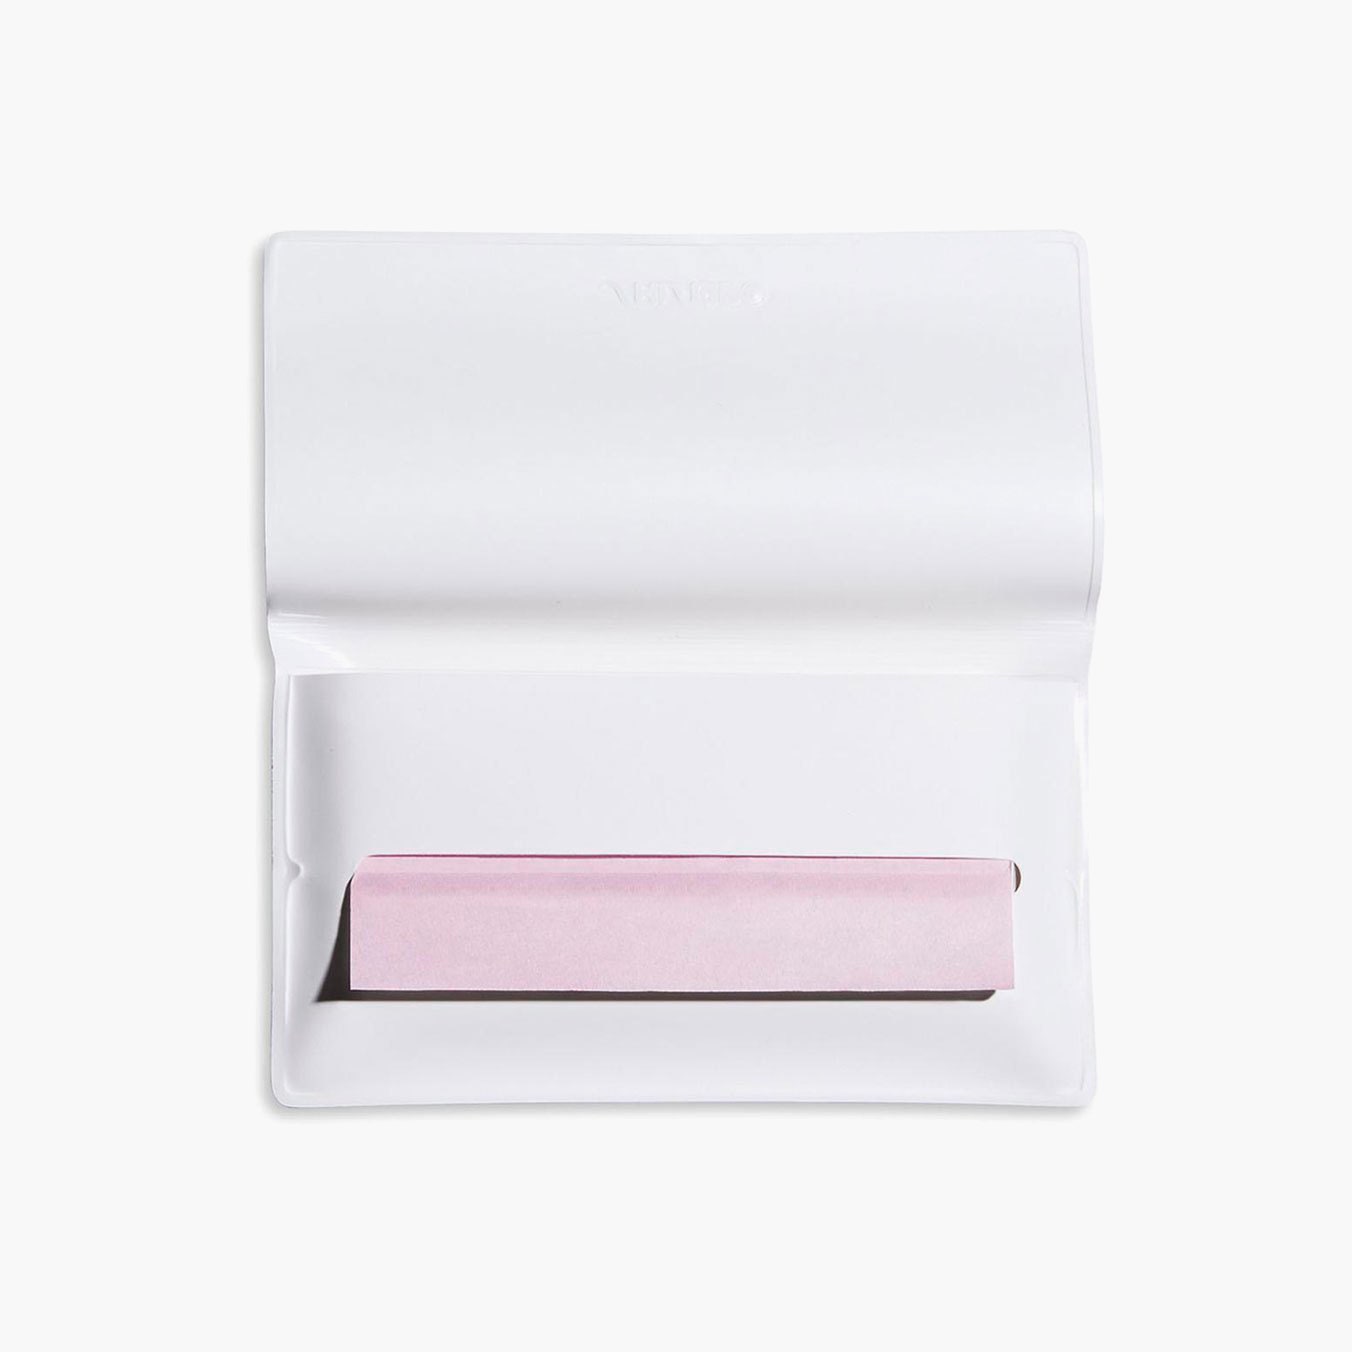 Матирующие салфетки OilContol Blotting Paper Shiseido 2300 рублей